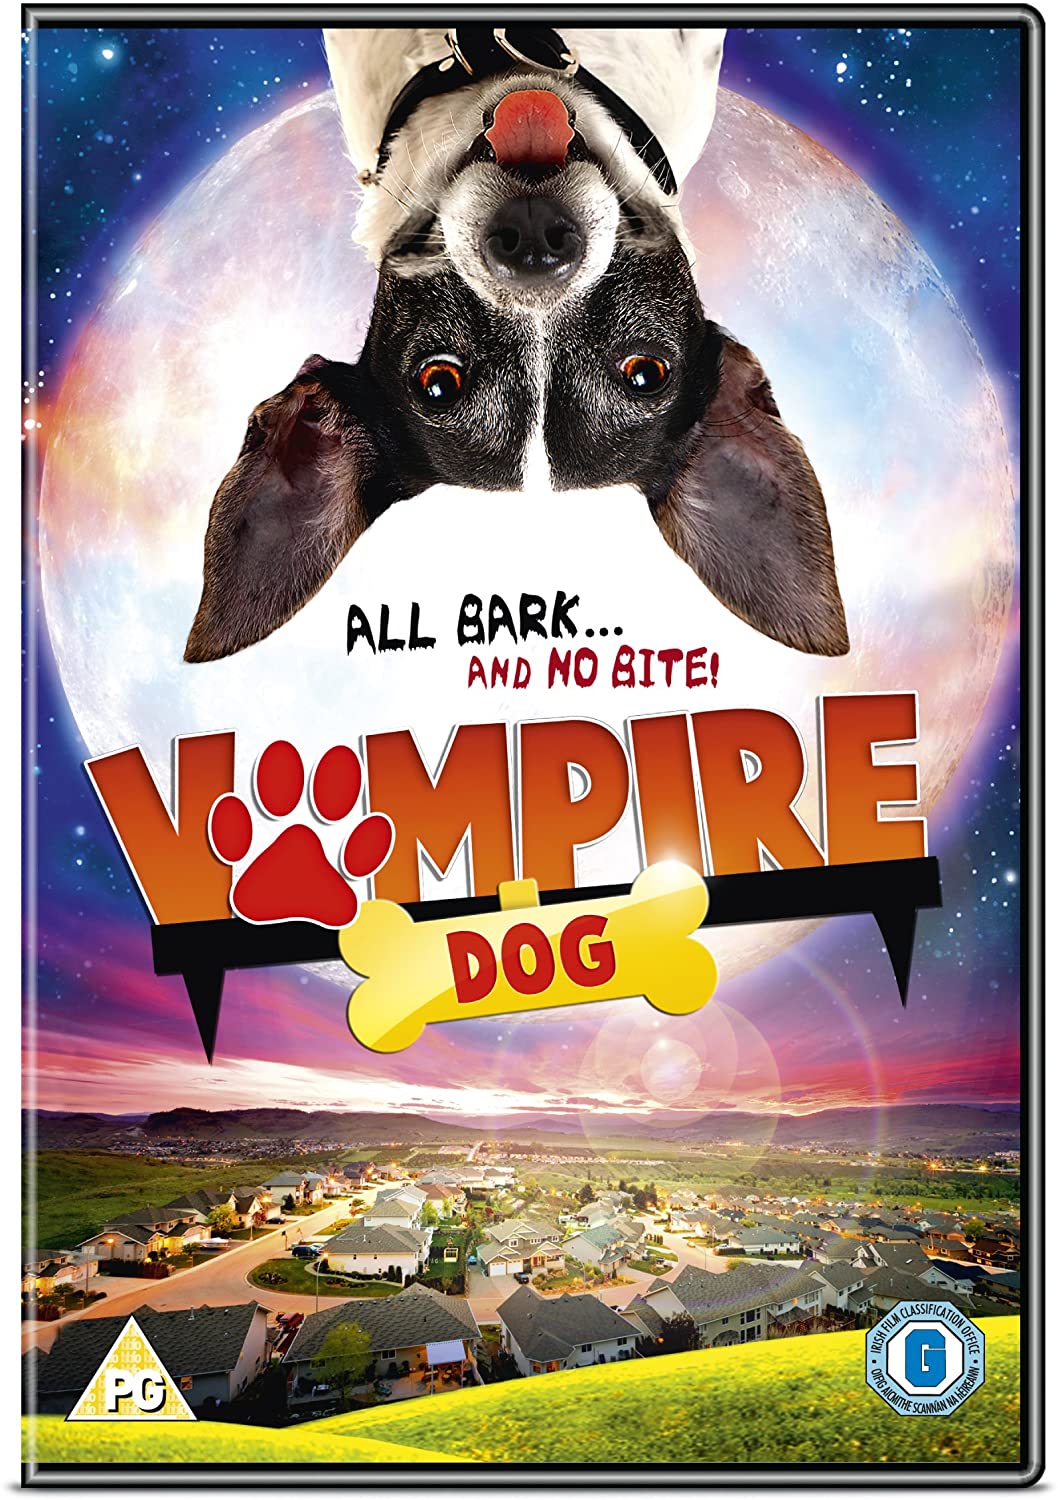 Vampire Dog - Family/Comedy [DVD]